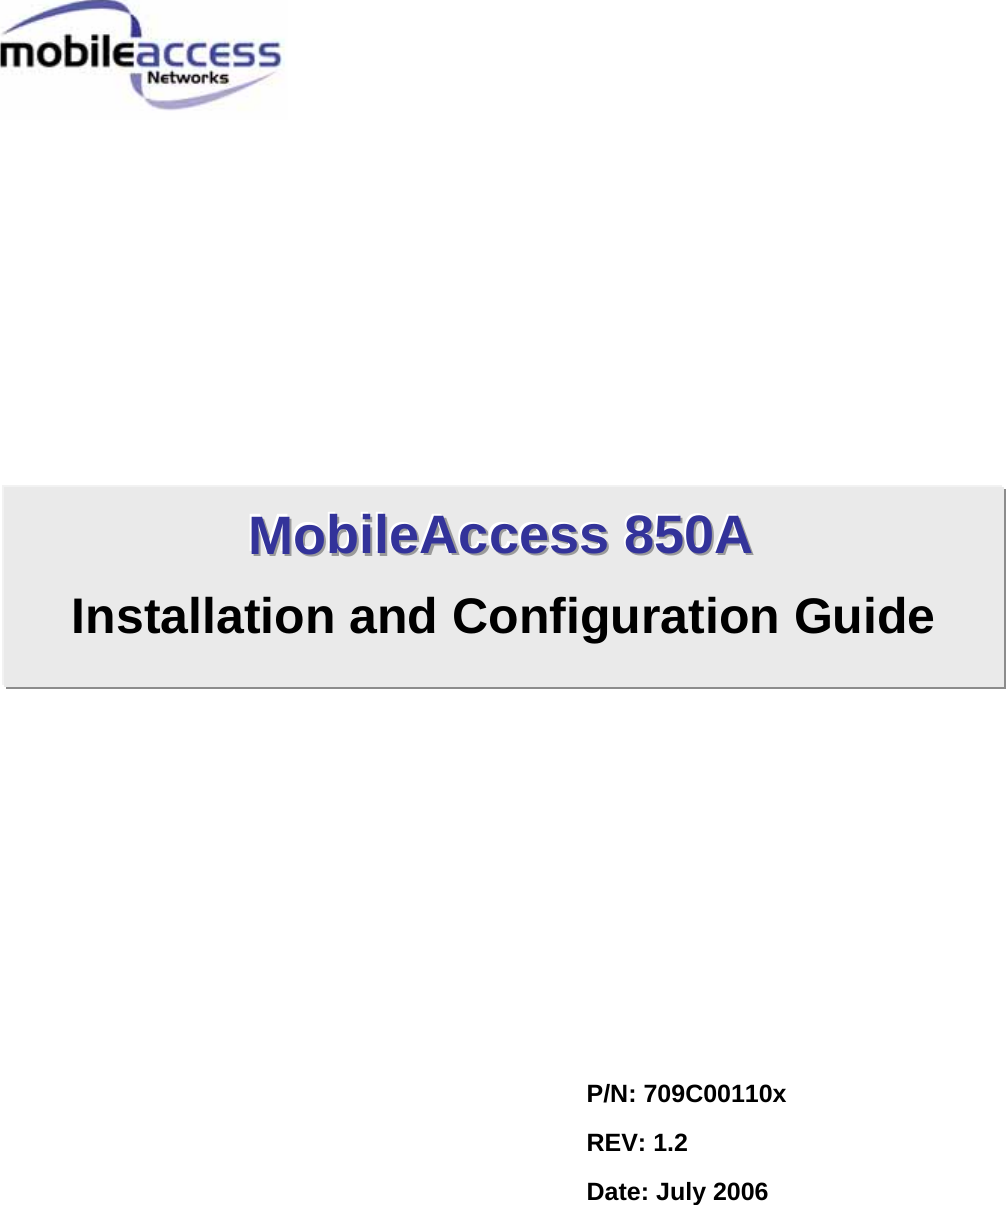                                            P/N: 709C00110x REV: 1.2 Date: July 2006 MMMooobbbiiillleeeAAAcccccceeessssss   888555000AAA   Installation and Configuration Guide   